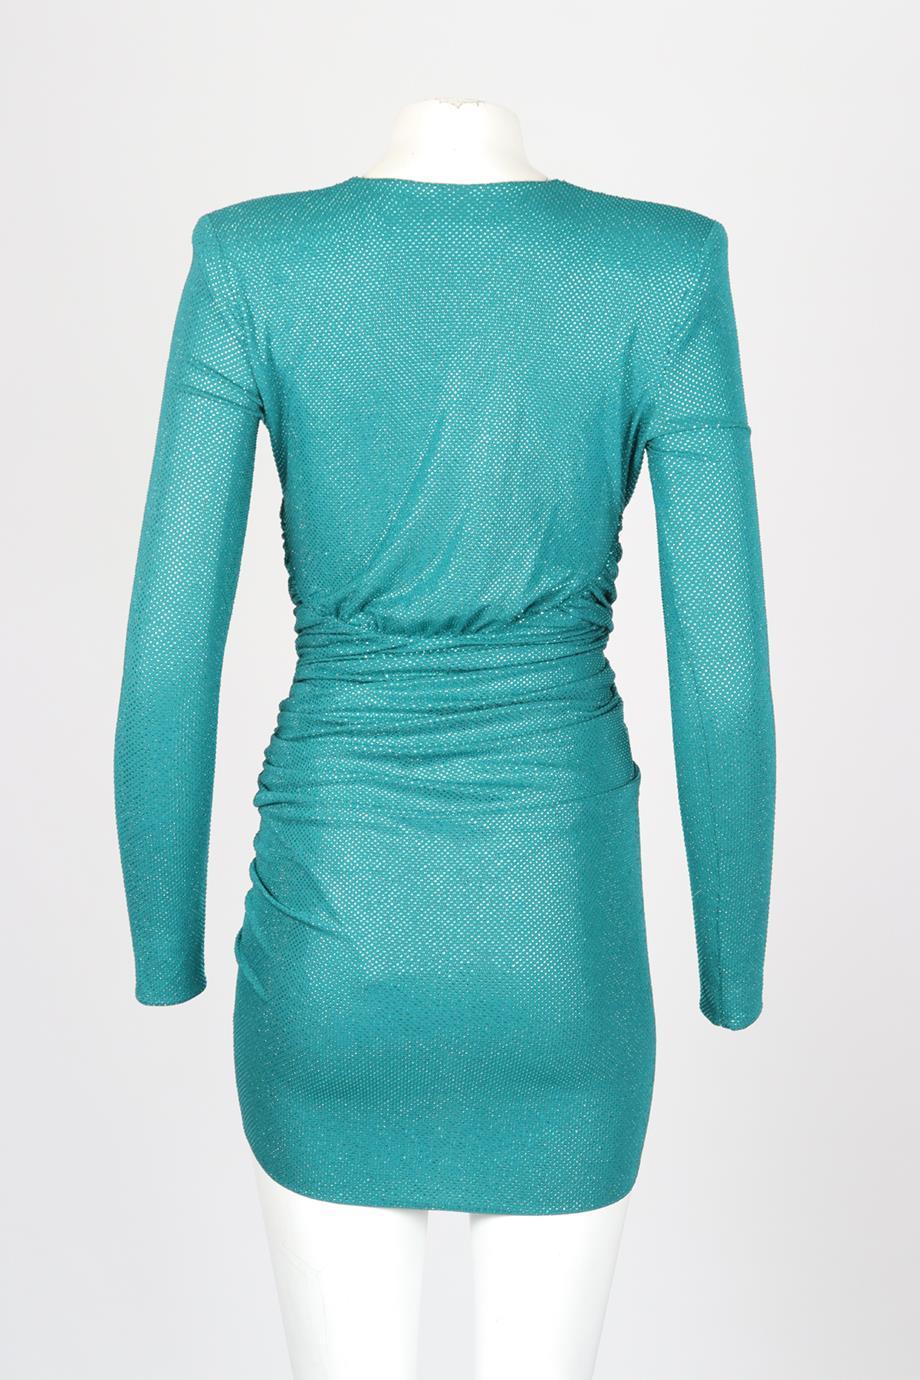 Women's Alexandre Vauthier Embellished Stretch Jersey Mini Dress Fr 34 Uk 6